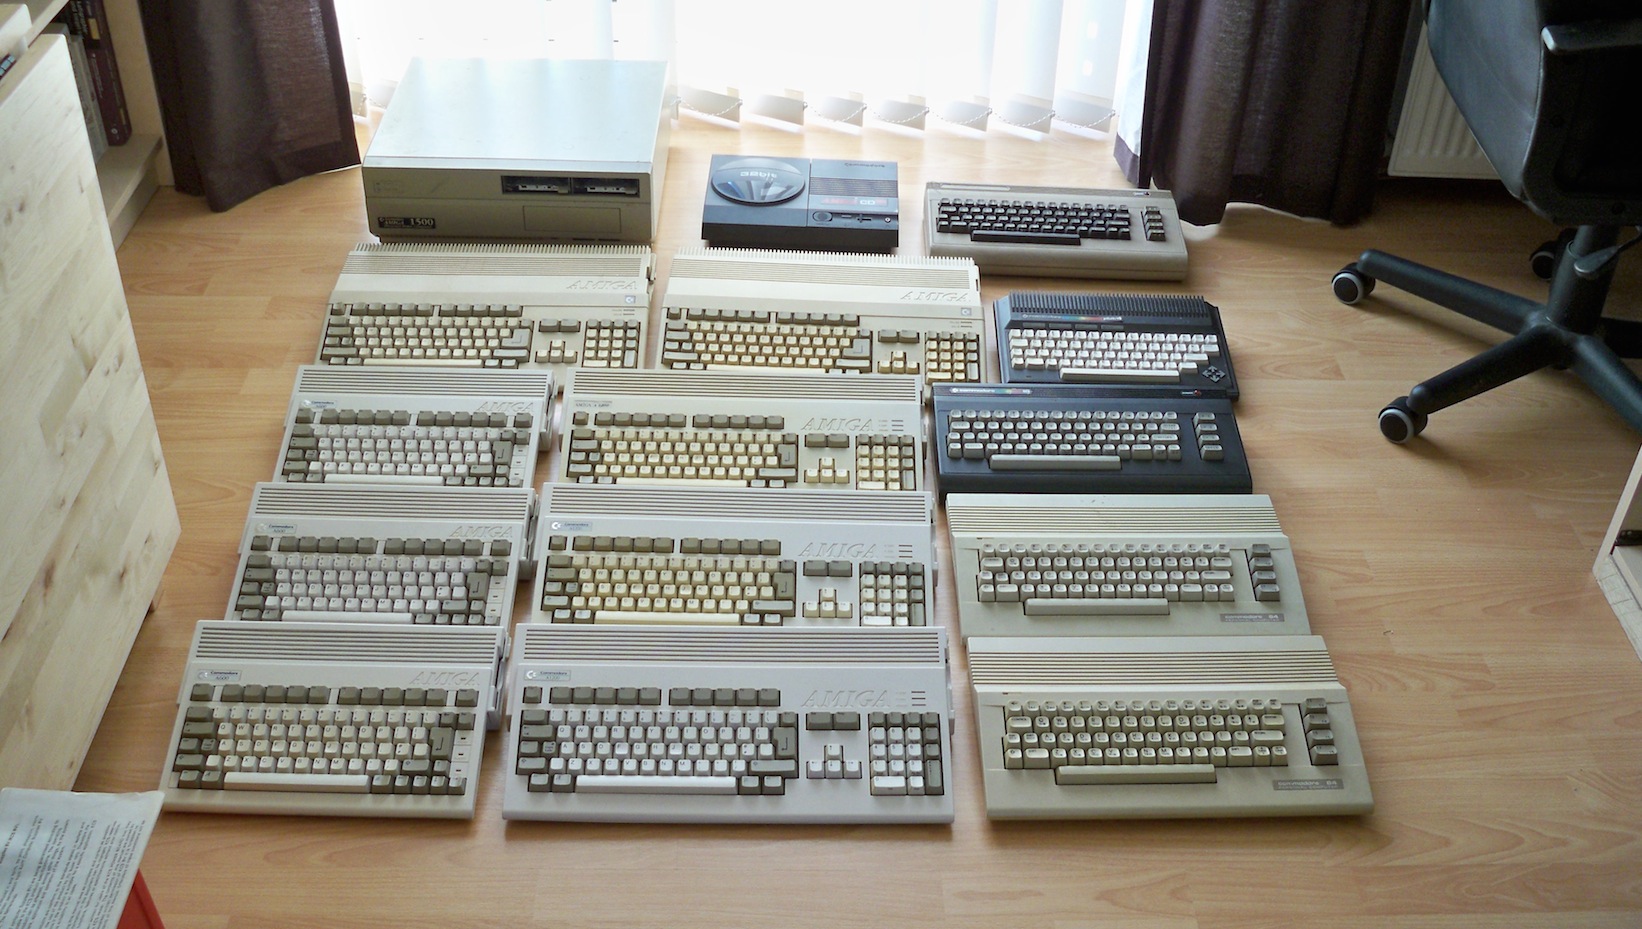 My Collection of Commodore / Amiga's